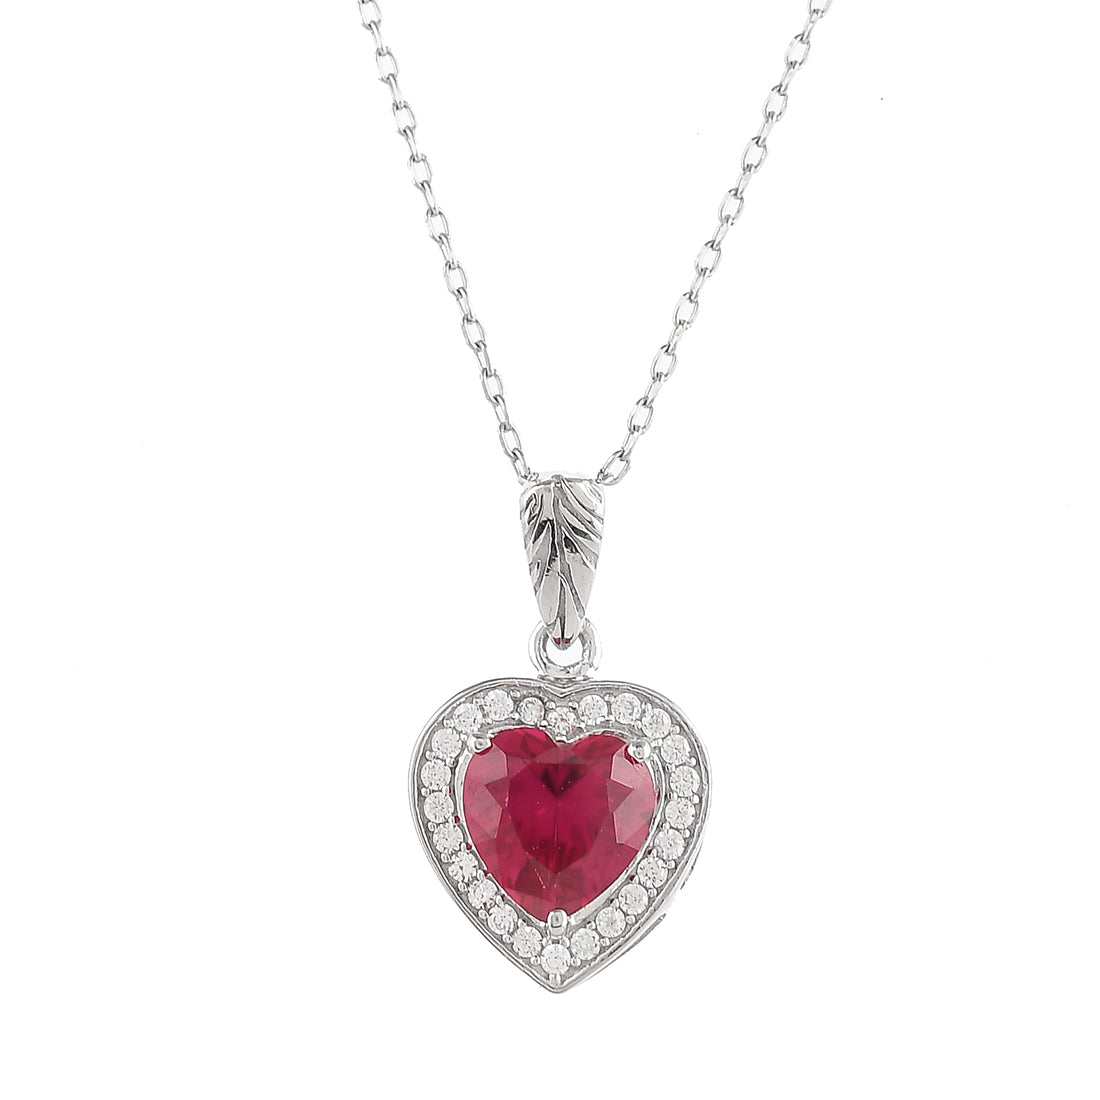 Women's Heart Red And Silver Zirconia Pendant - Voylla